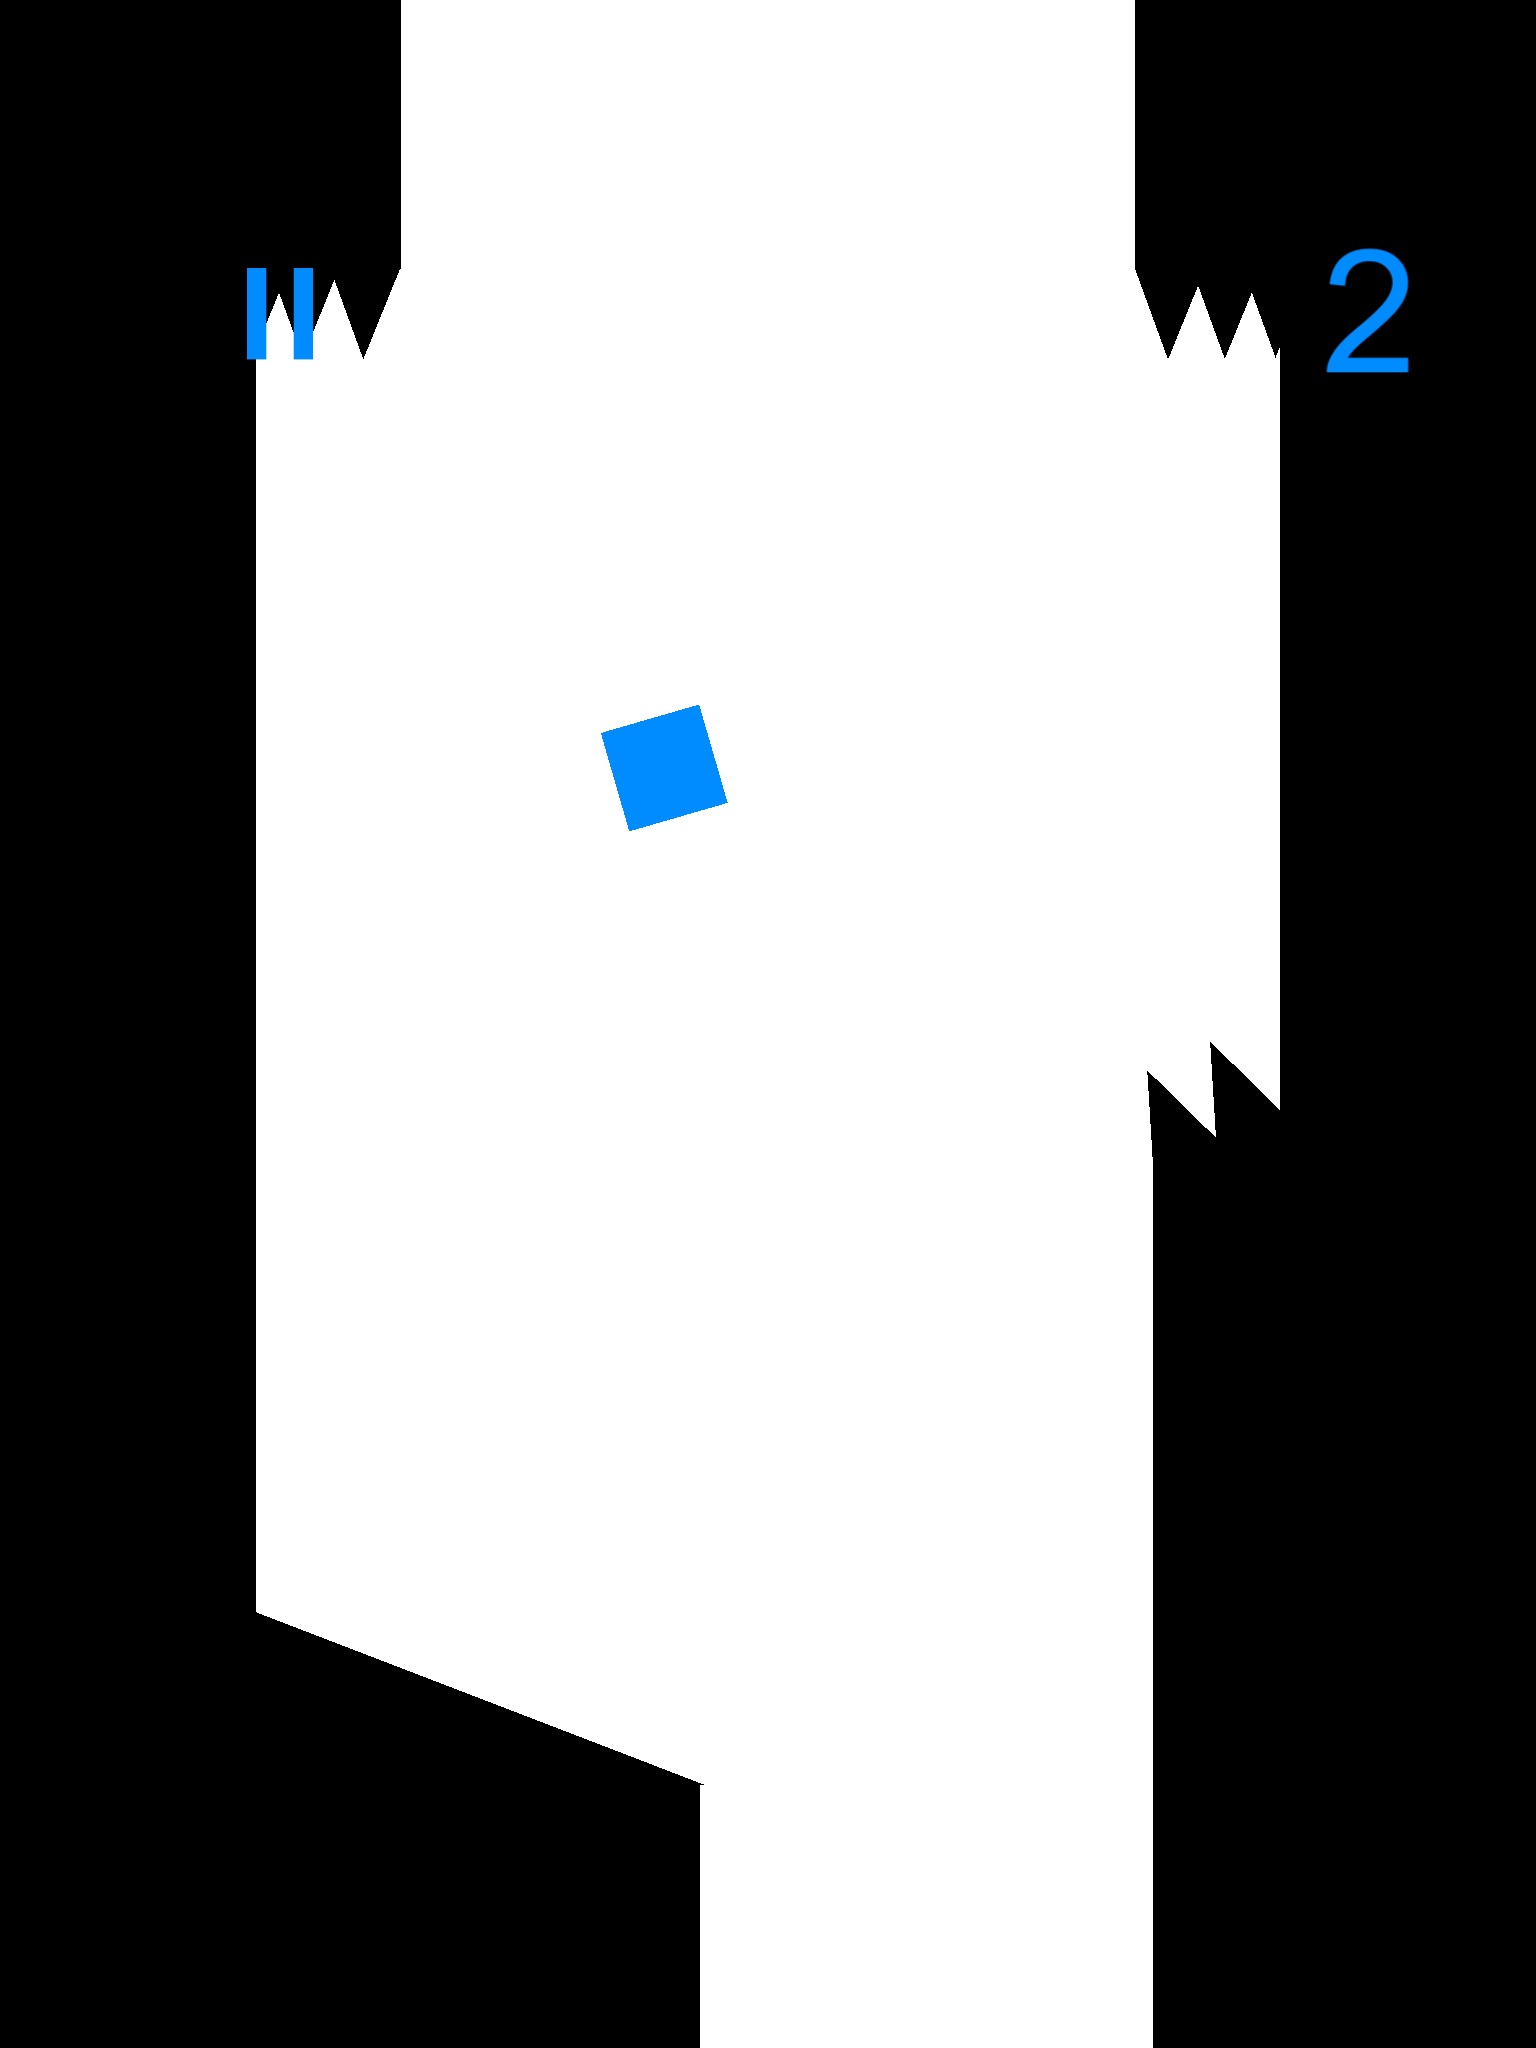 Wall Climber - Jump to the Top screenshot 3